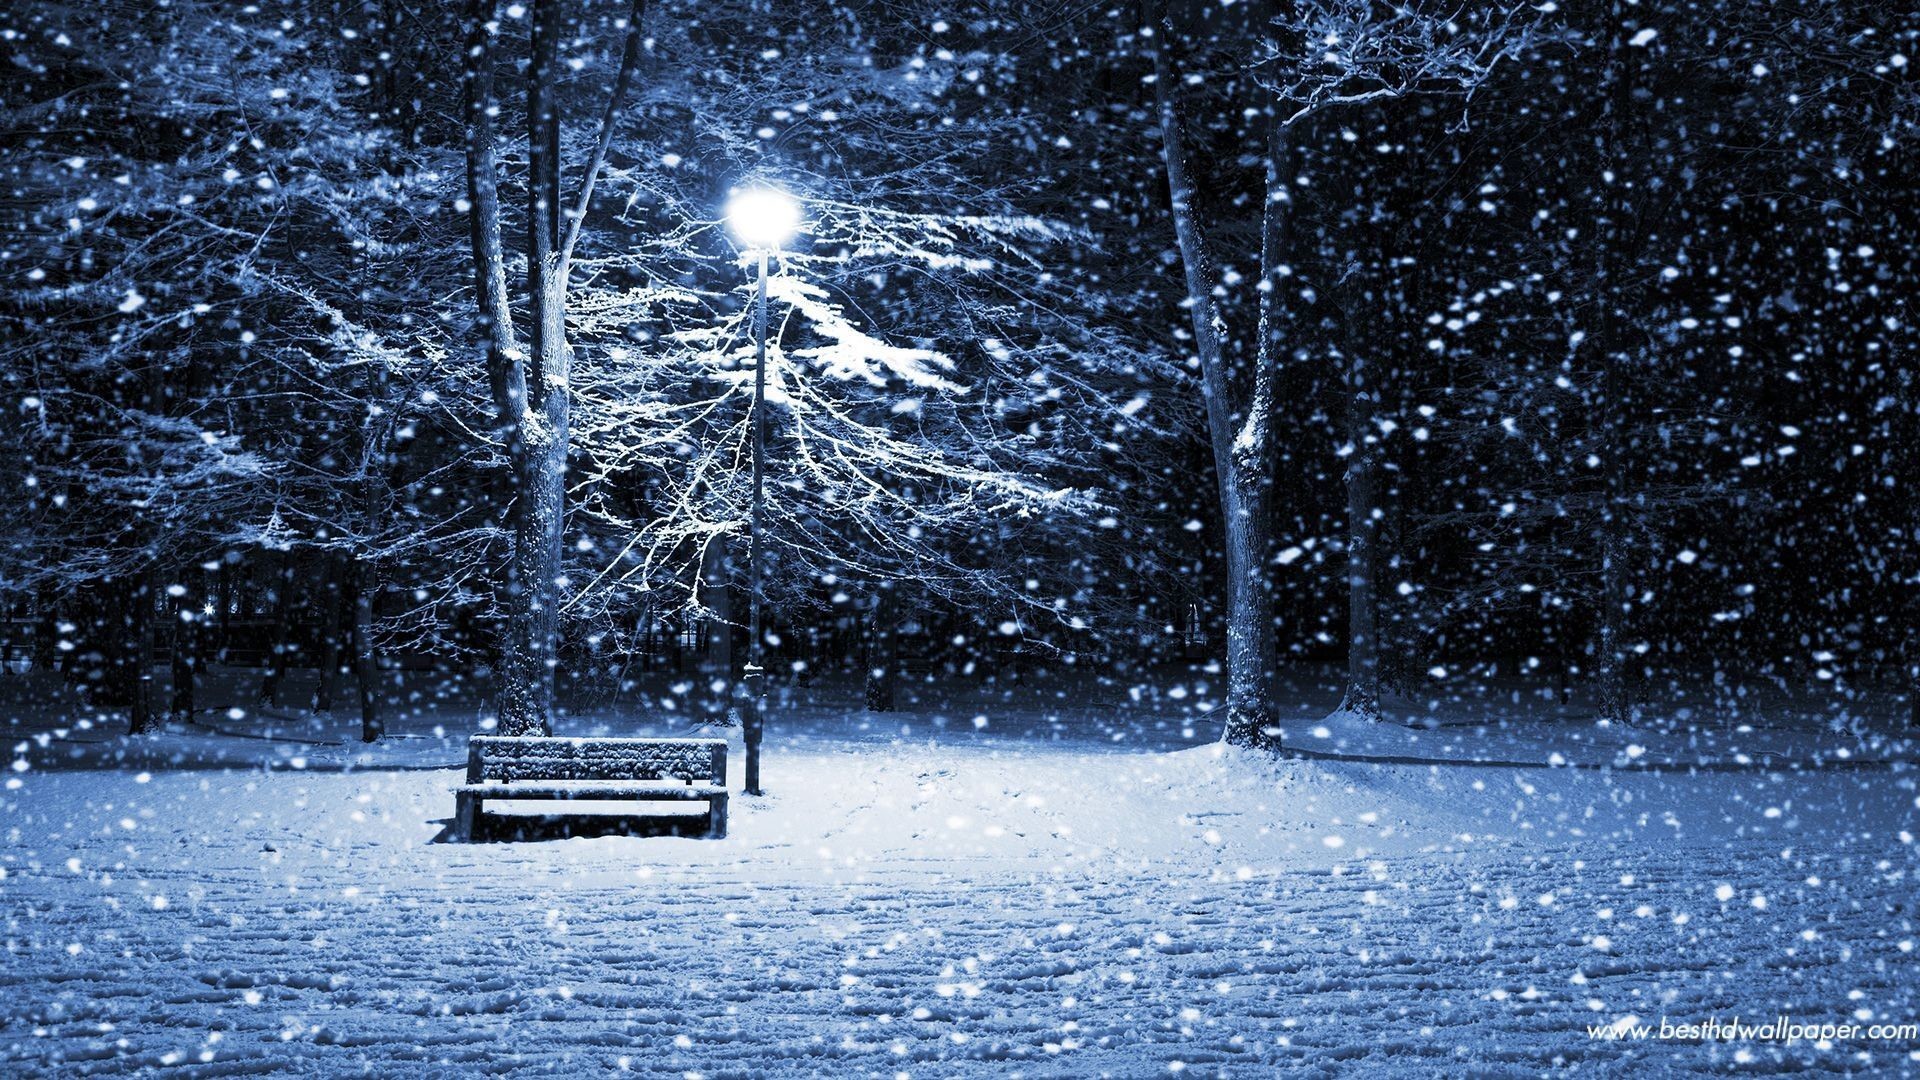 1920x1080 ... winter snow scene pictures | Snow Wallpapers | Desktop Wallpapers ...  Free Christmas ...